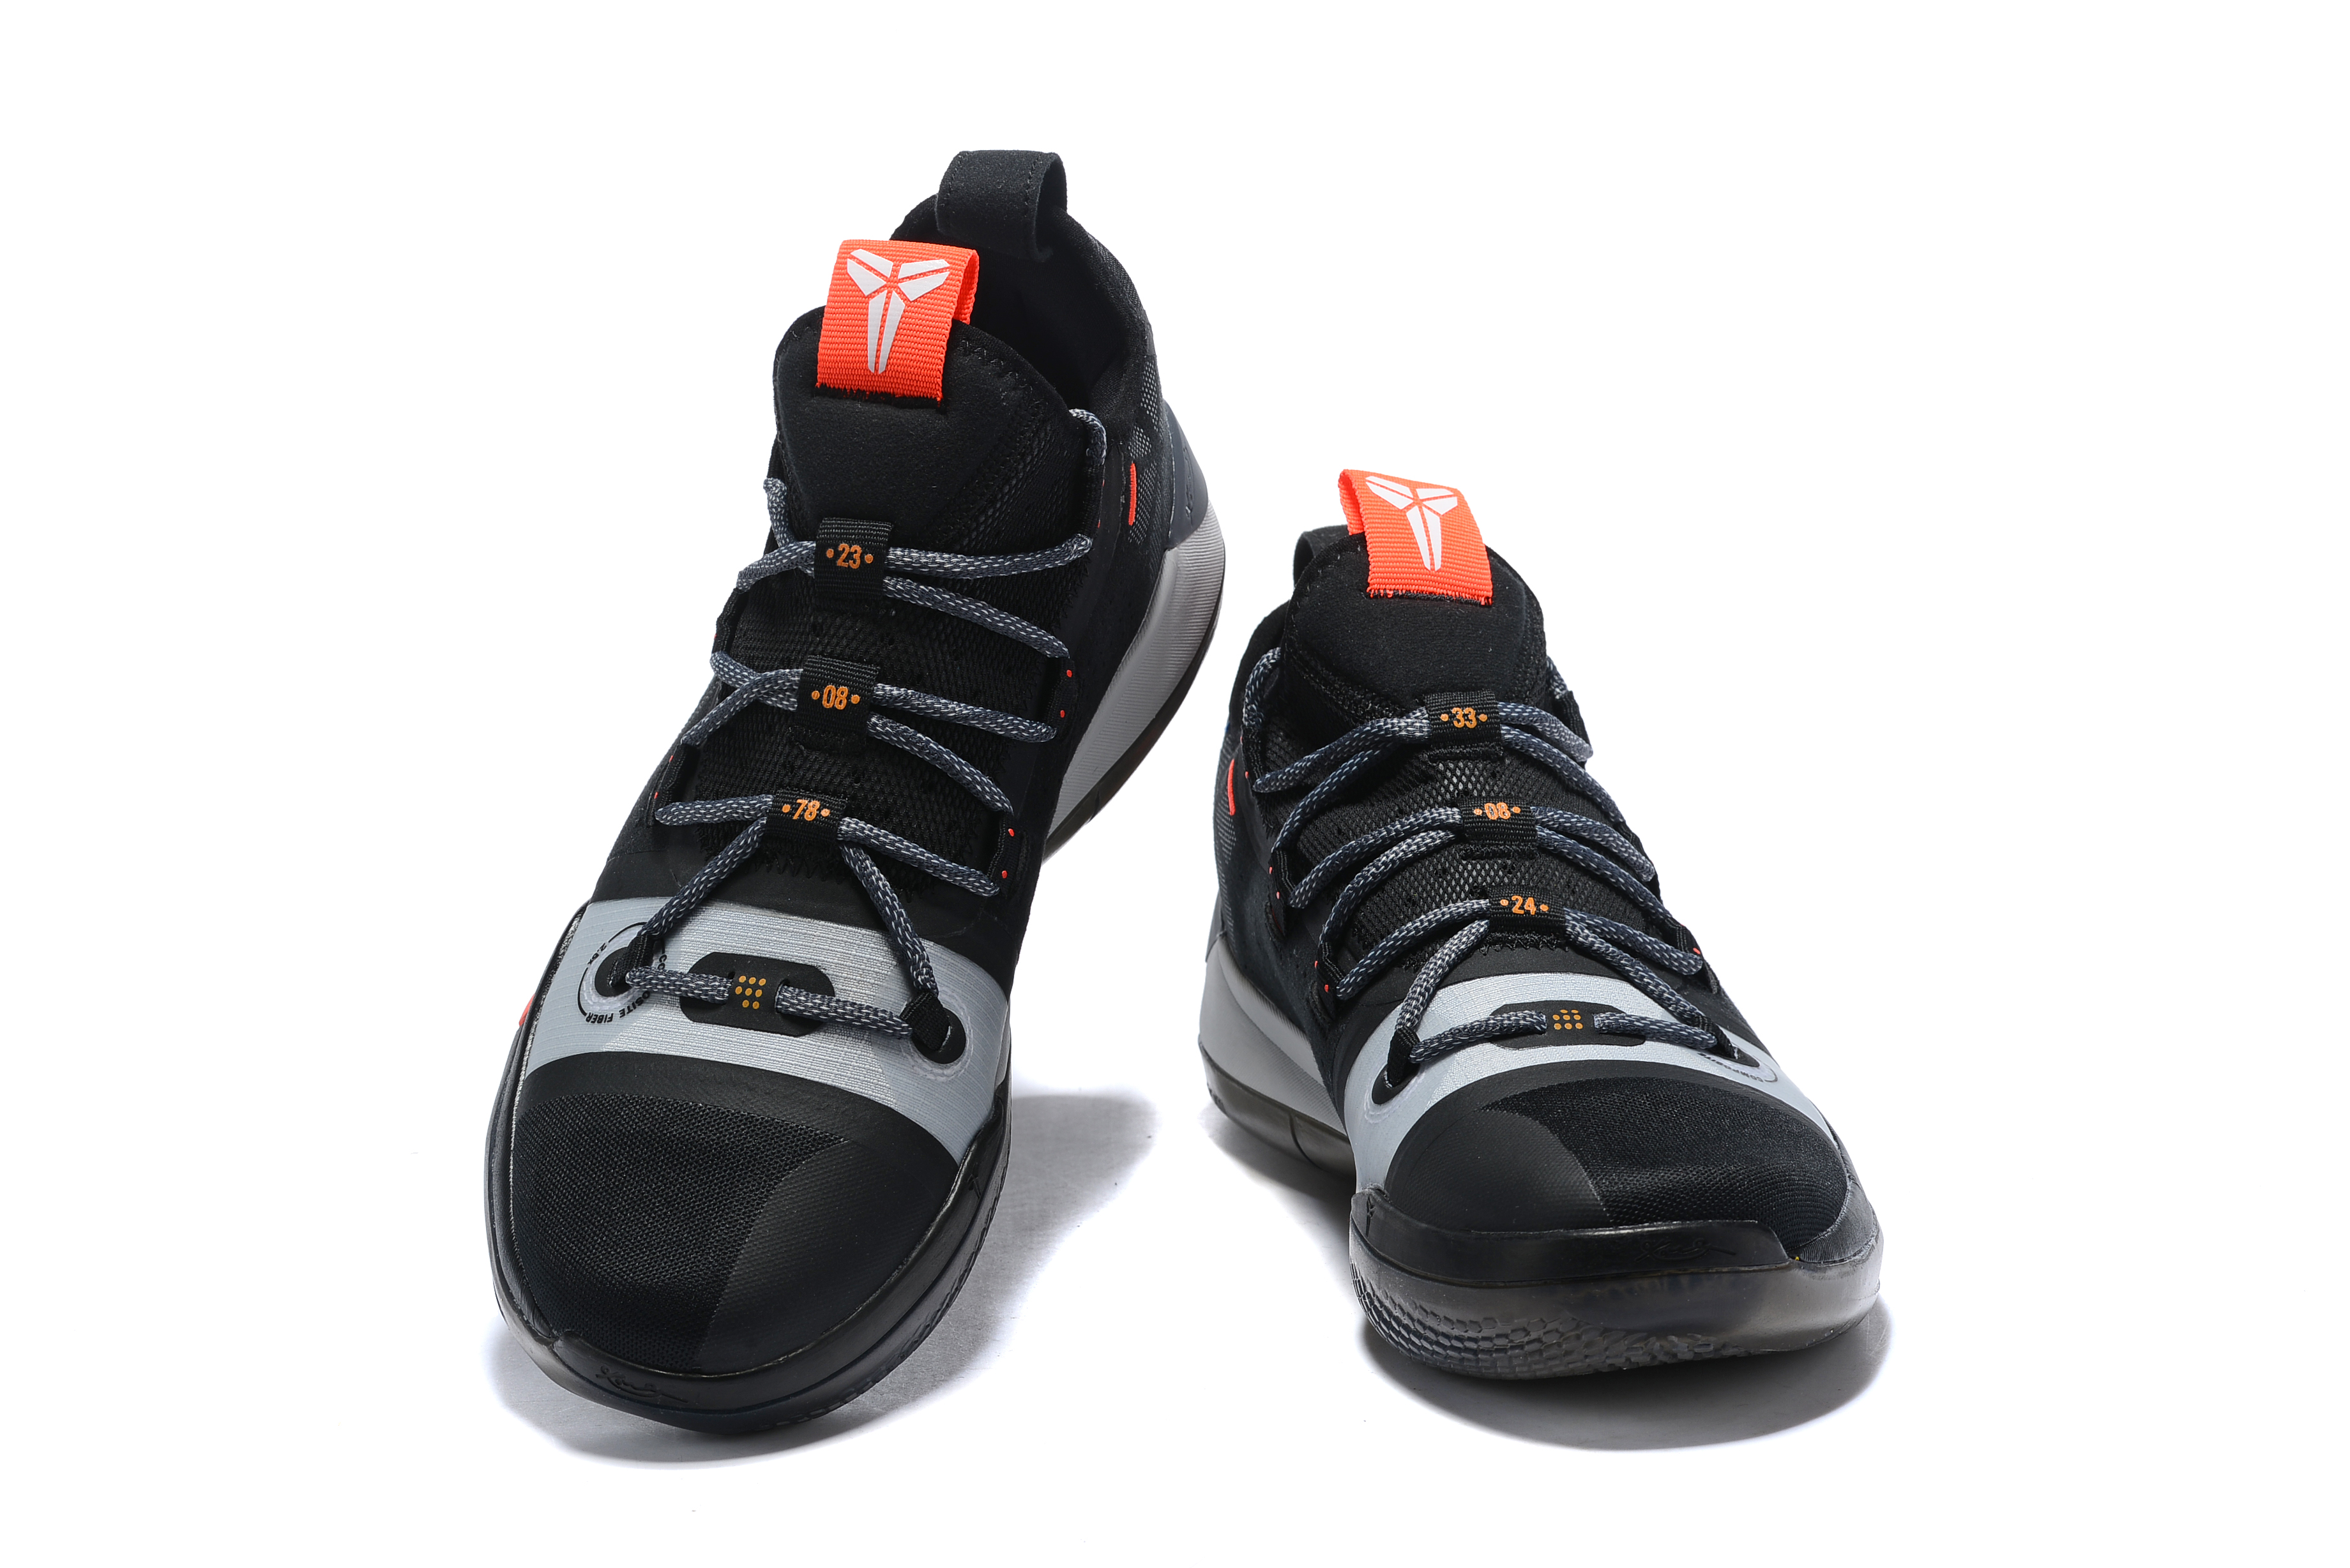 New Nike Kobe AD Black Sliver Shoes